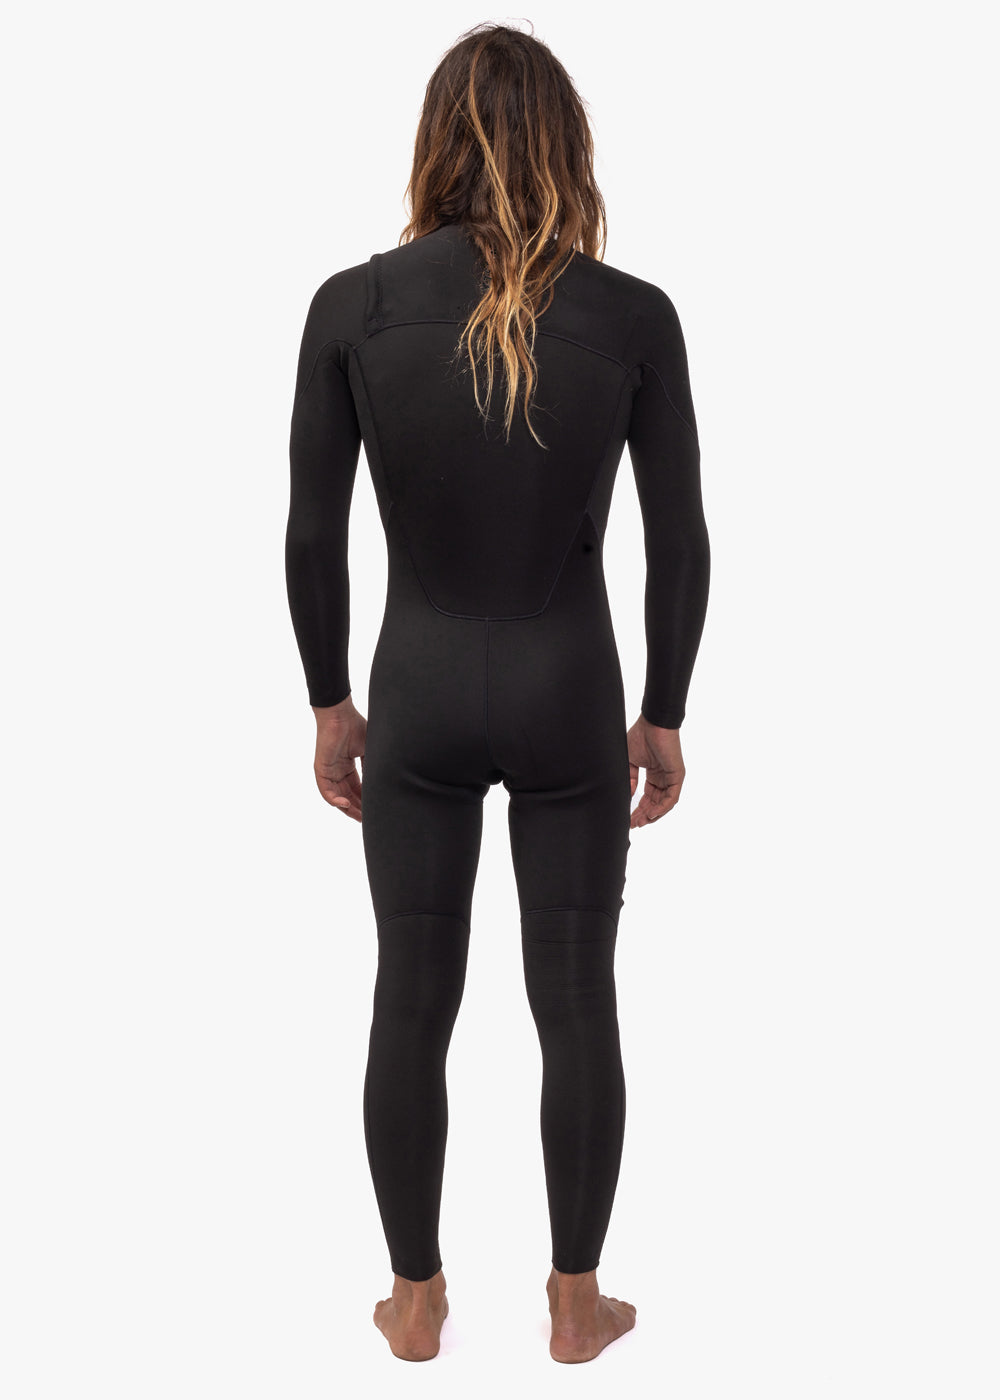 7 Seas 4-3 Full Chest Zip Wetsuit - No Logos